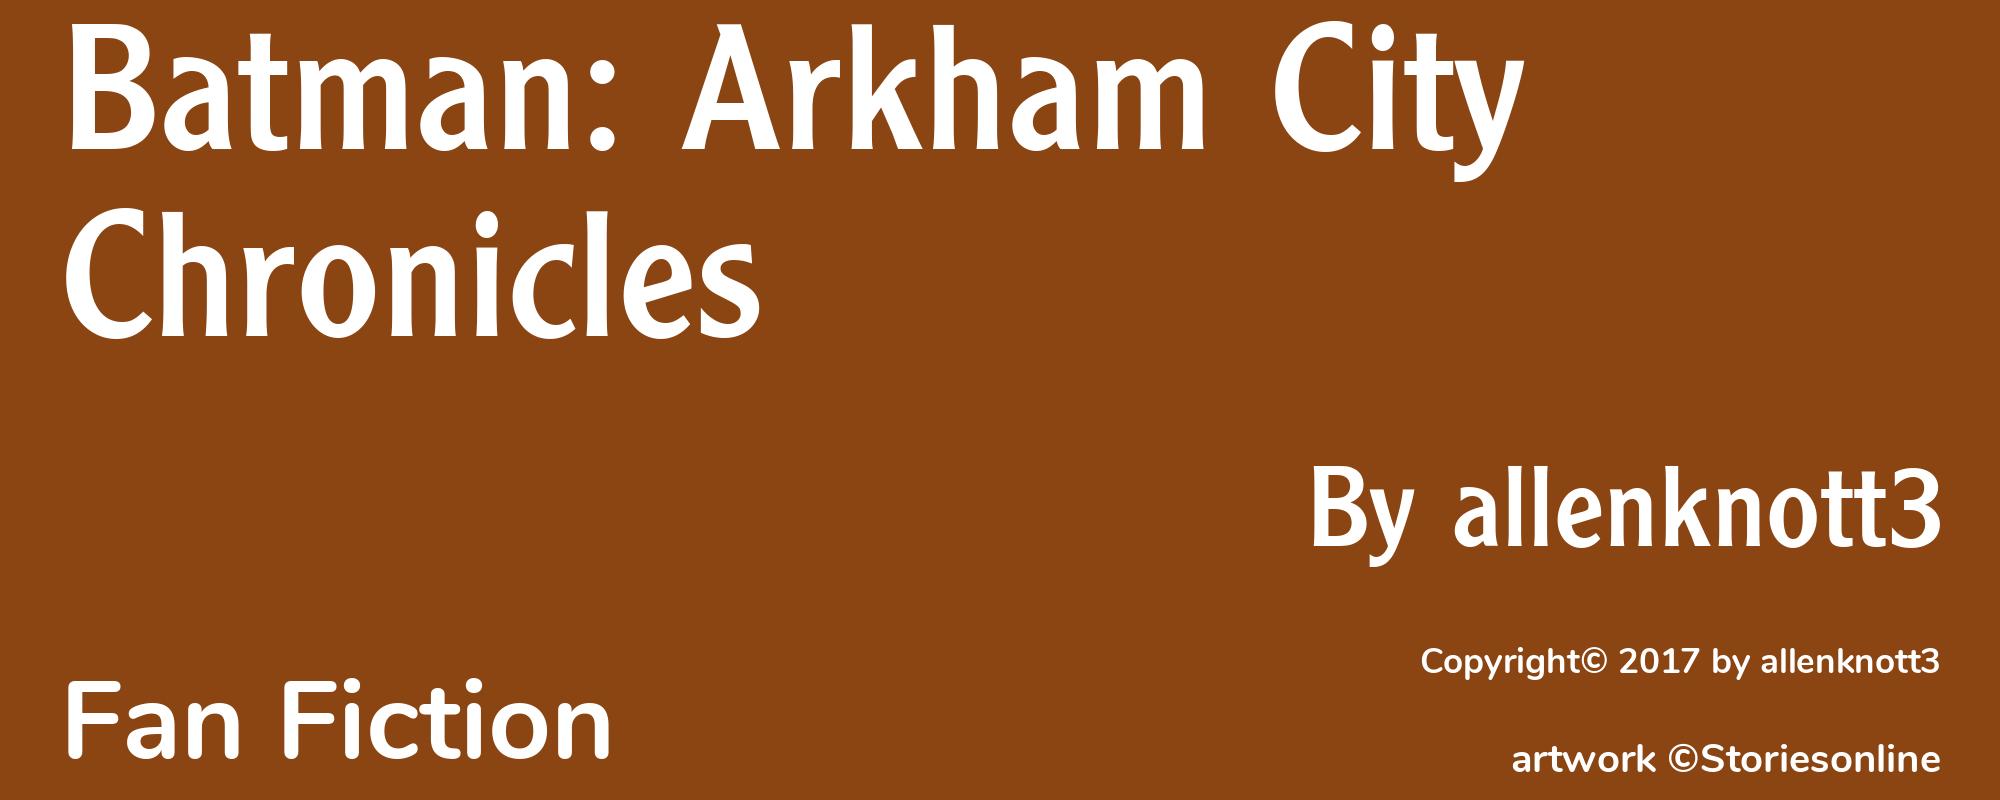 Batman: Arkham City Chronicles - Cover